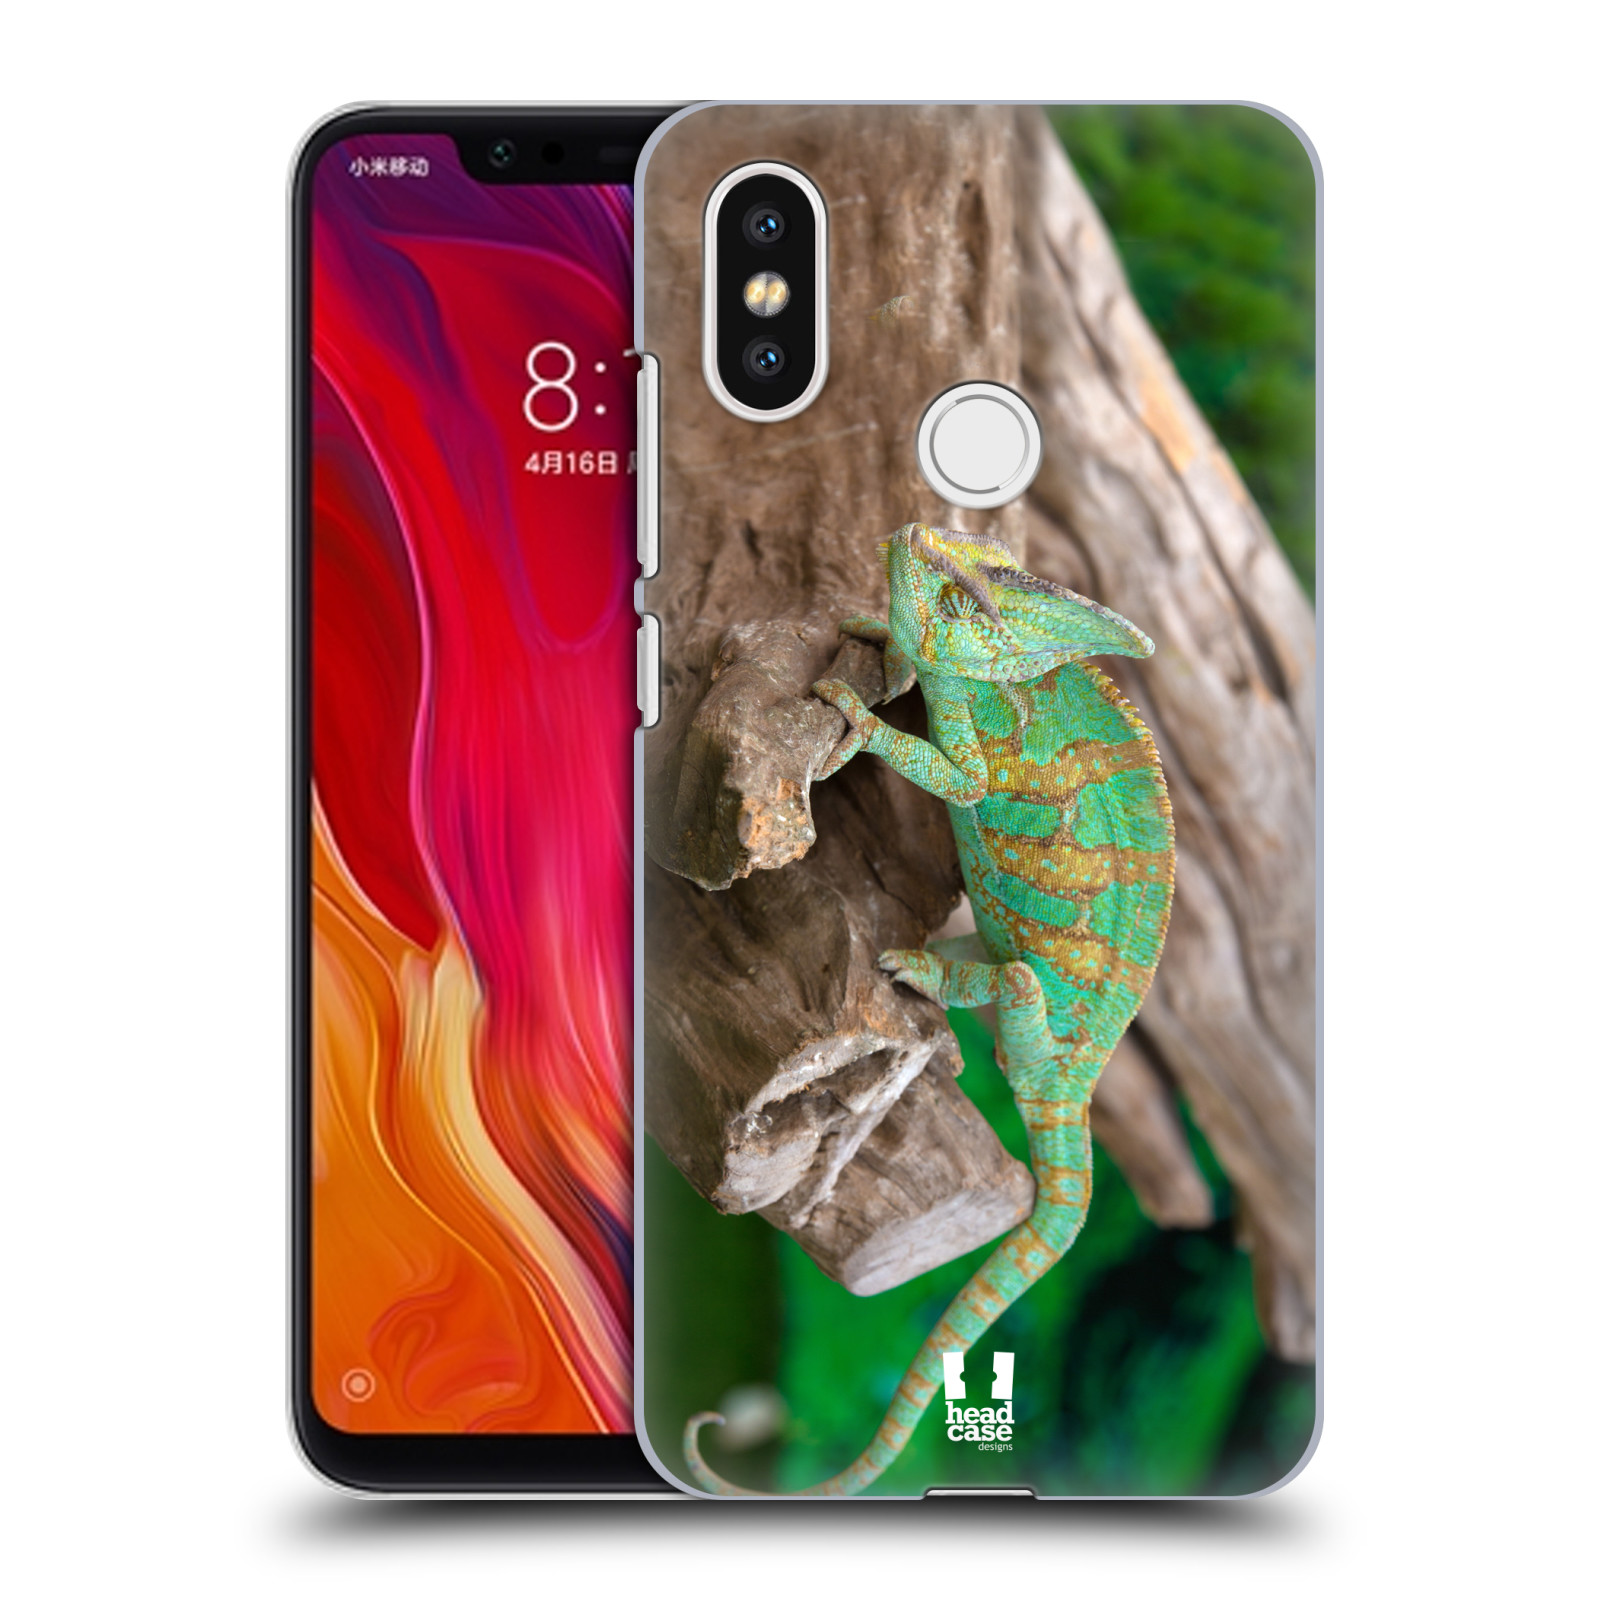 HEAD CASE plastový obal na mobil Xiaomi Mi 8 vzor slavná zvířata foto chameleon